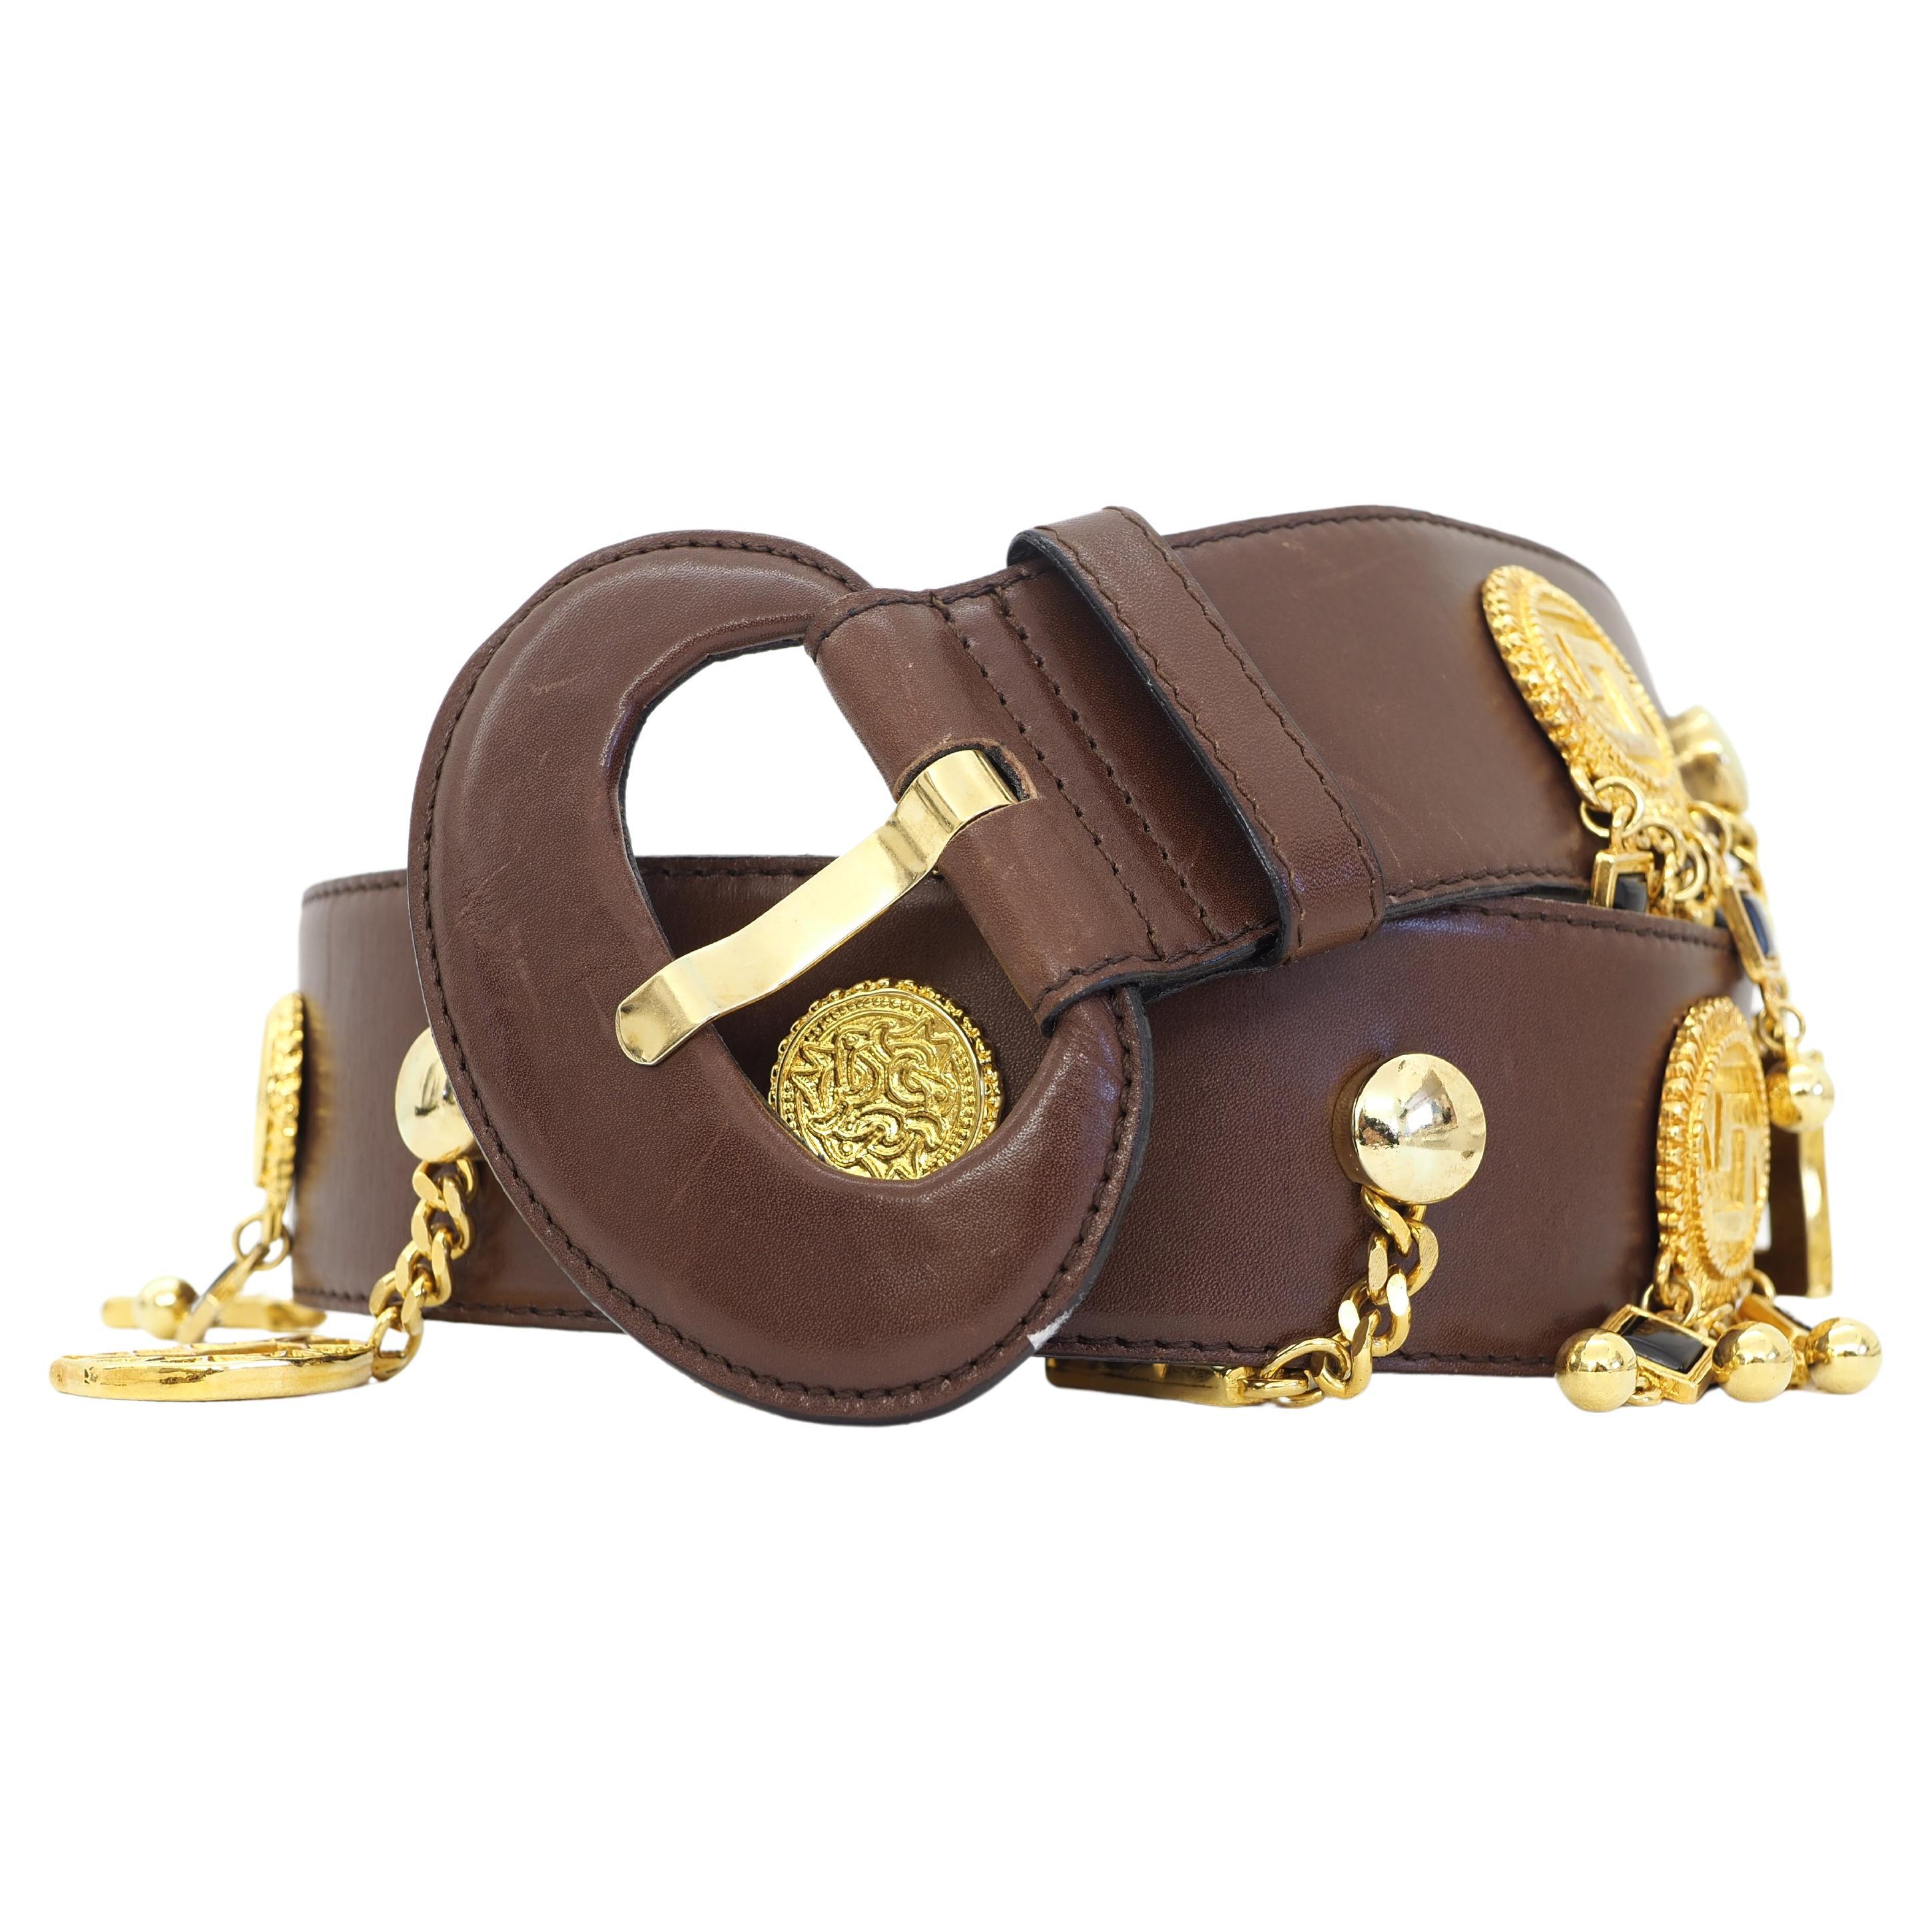 Escada brown leather gold hardware belt 